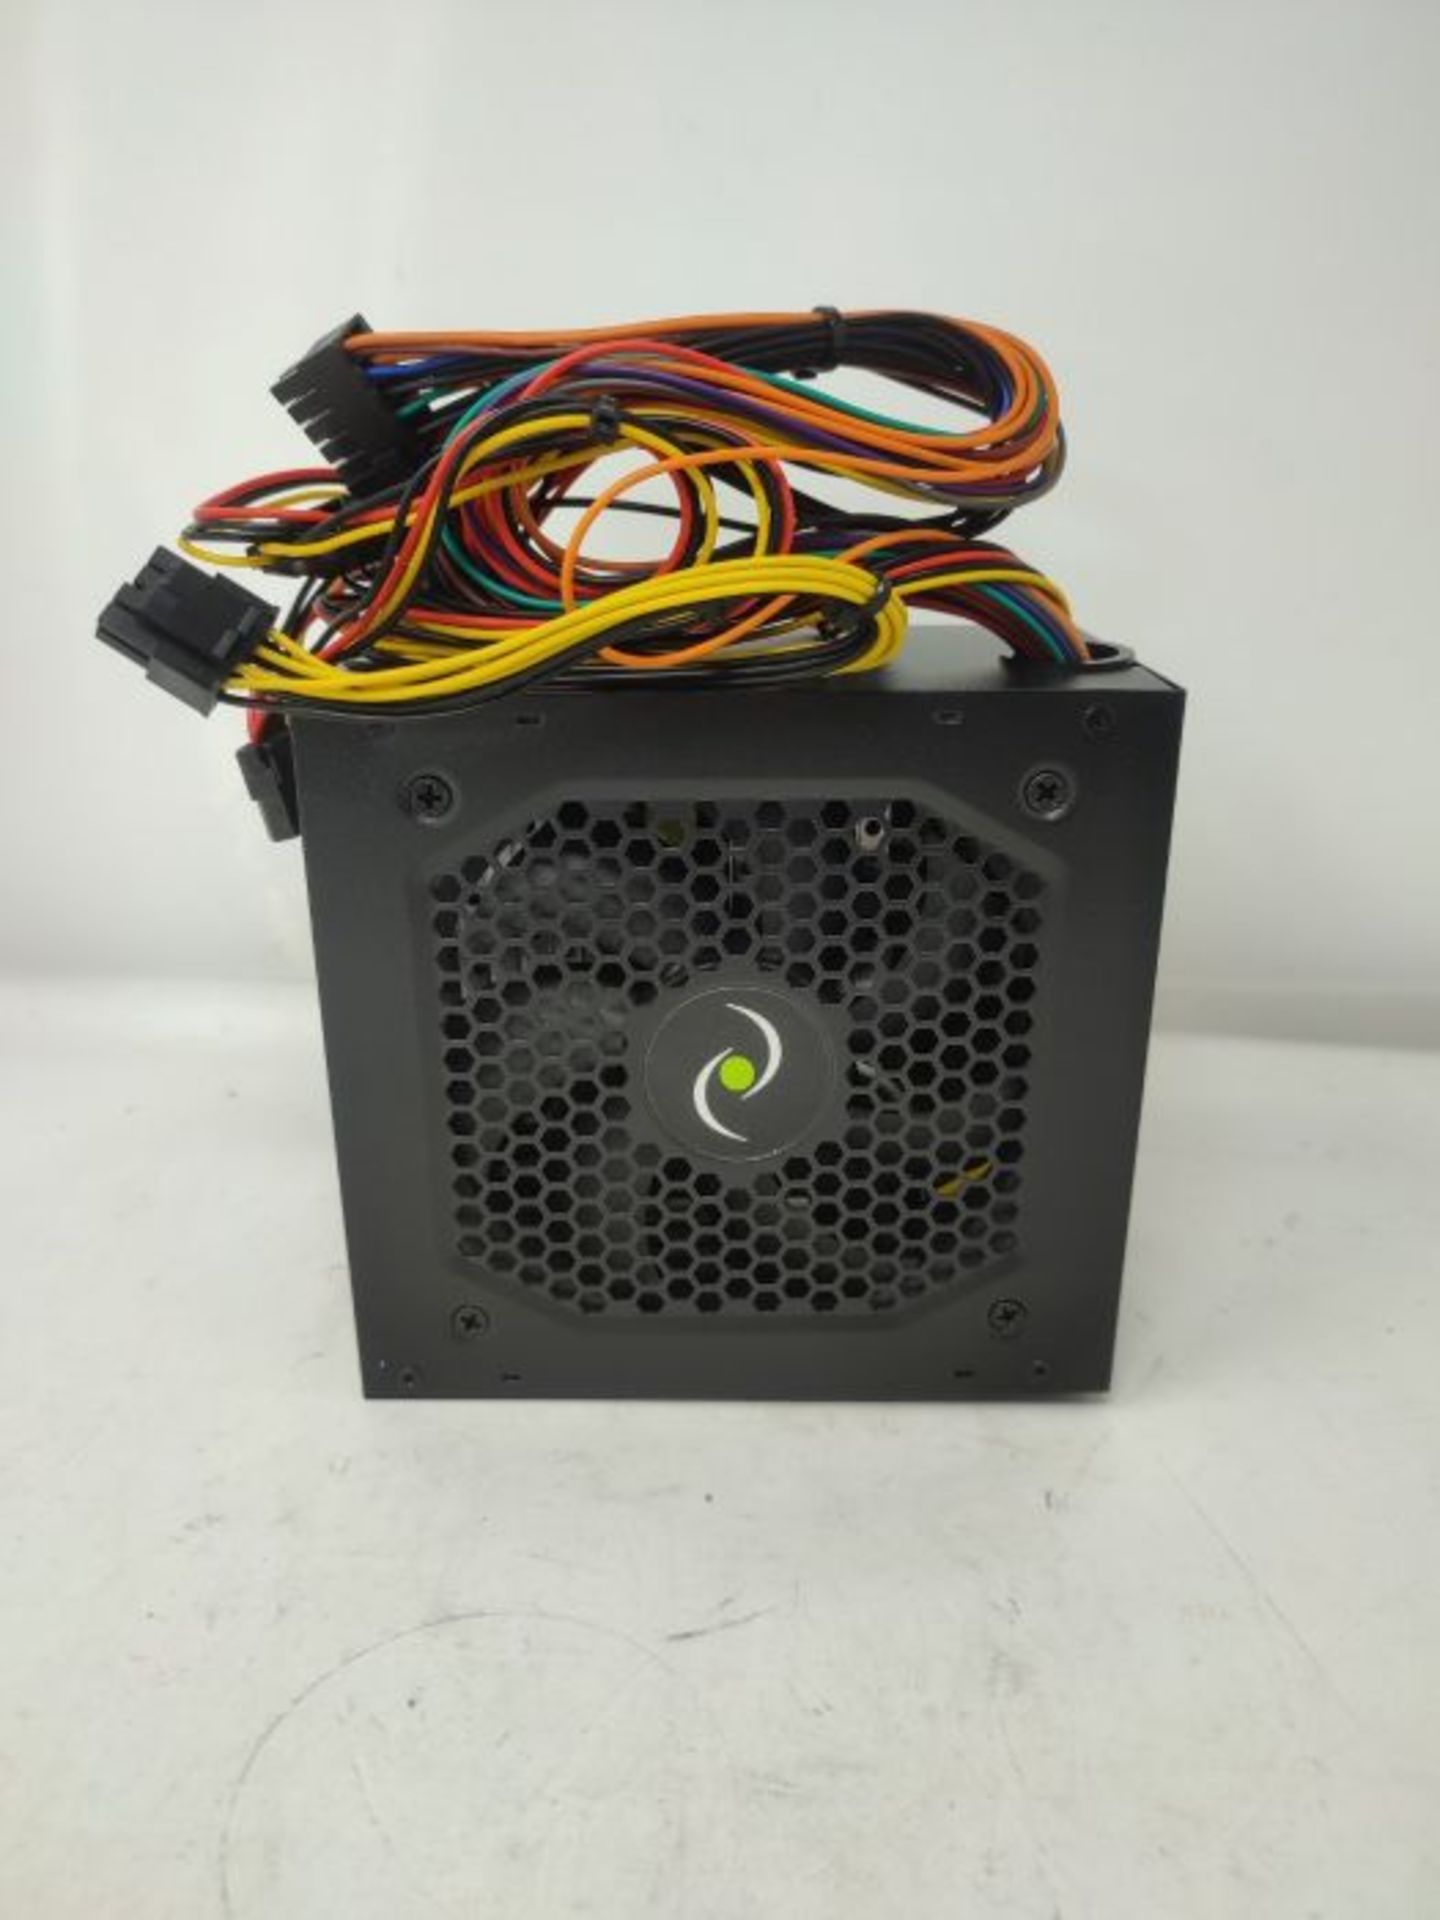 Tecnoware ATX 550W power supply for PC - Silent 12 cm fan - Connectors 2 x SATA, 1 x 2 - Image 2 of 2